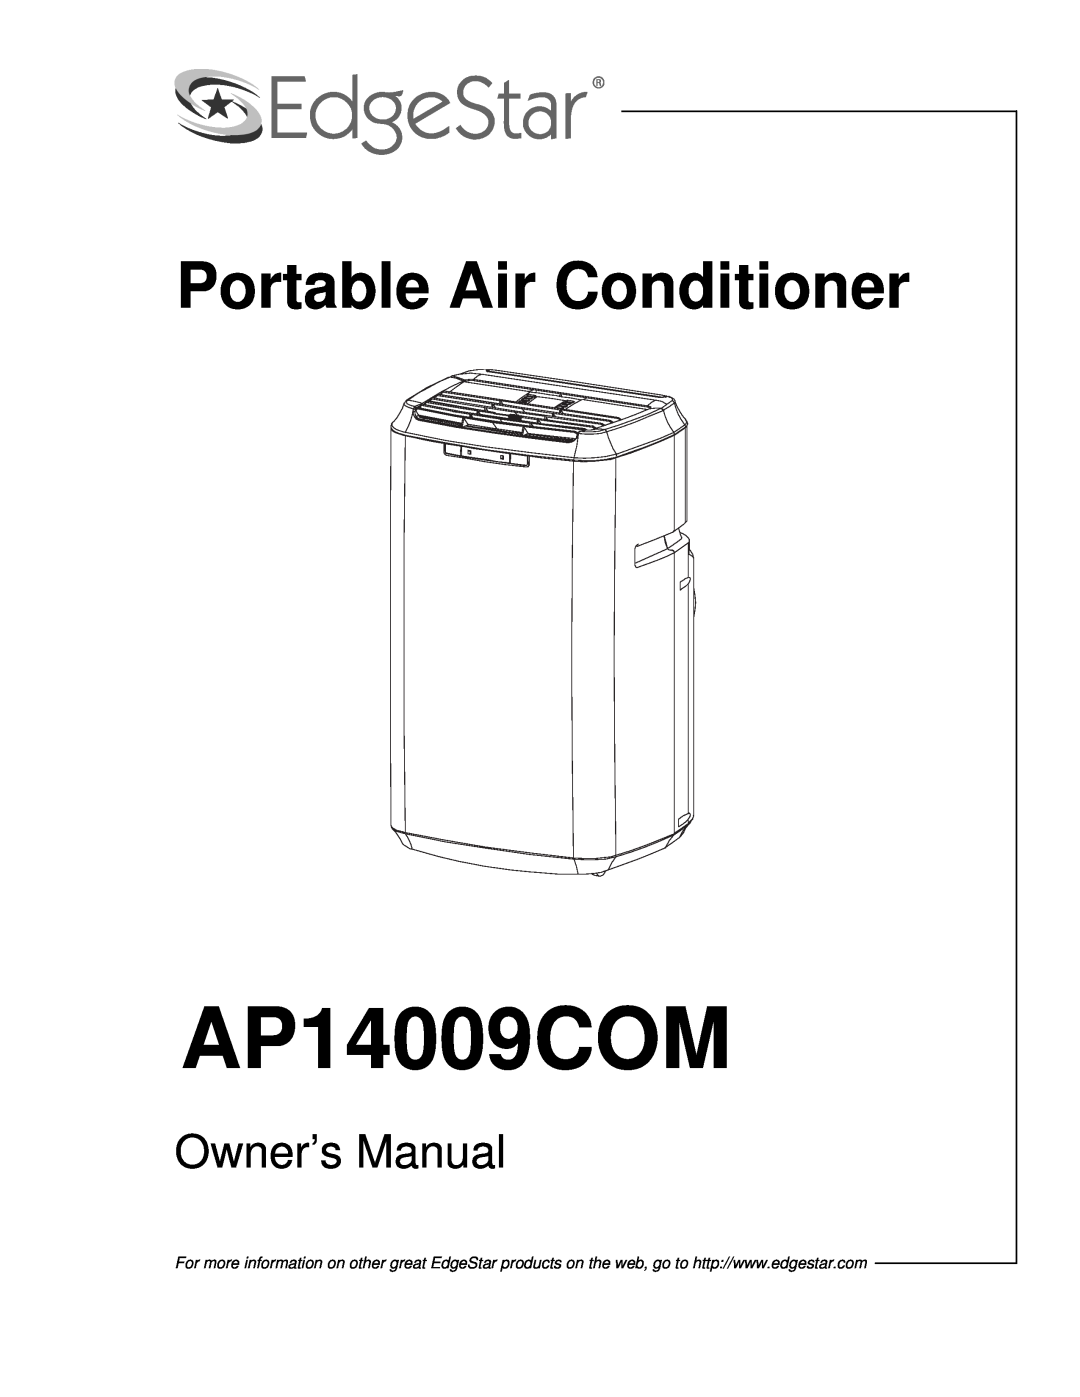 EdgeStar AP14009COM owner manual Portable Air Conditioner 